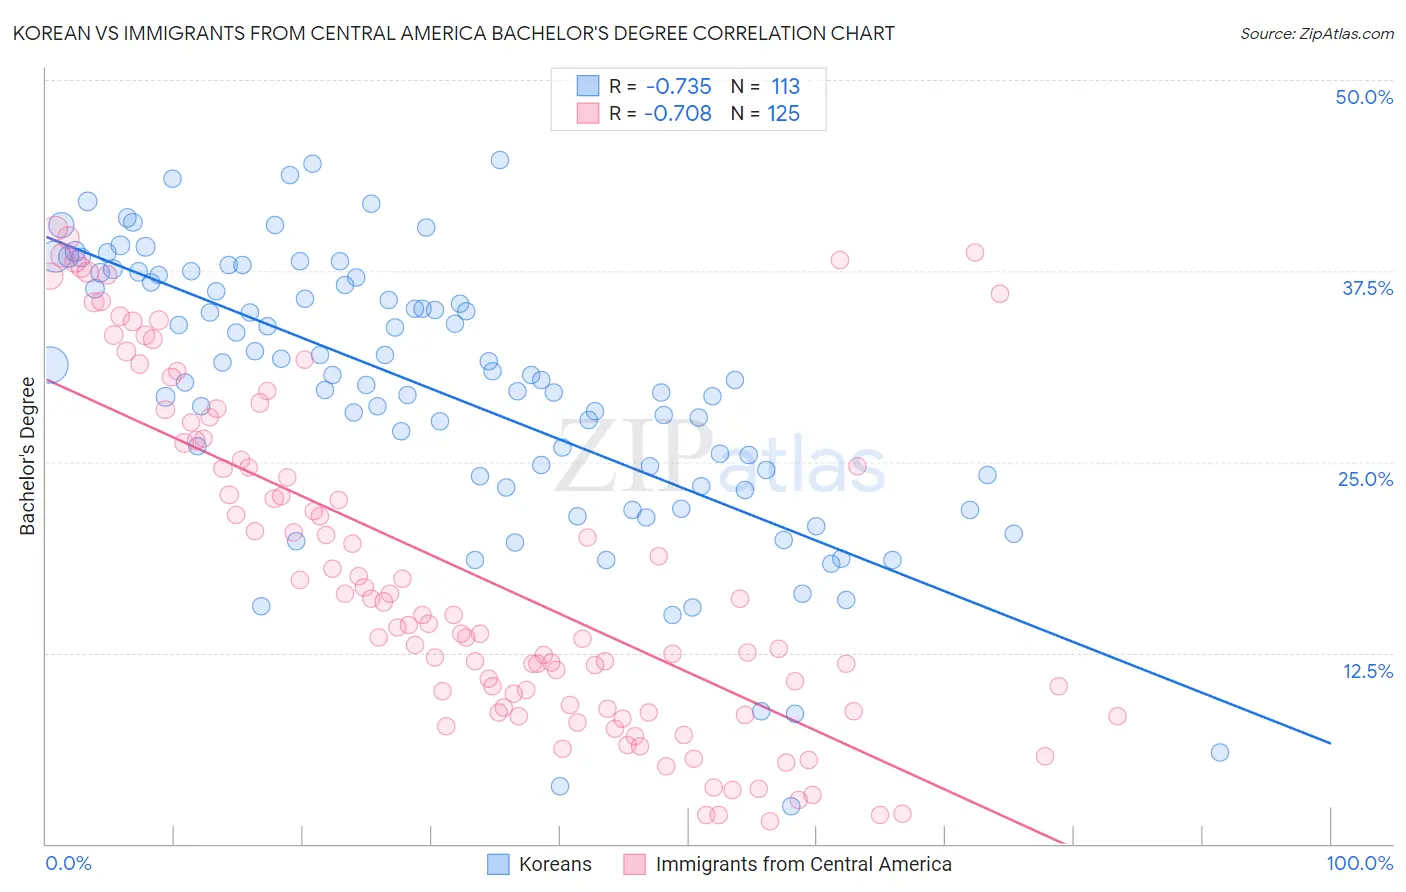 Korean vs Immigrants from Central America Bachelor's Degree